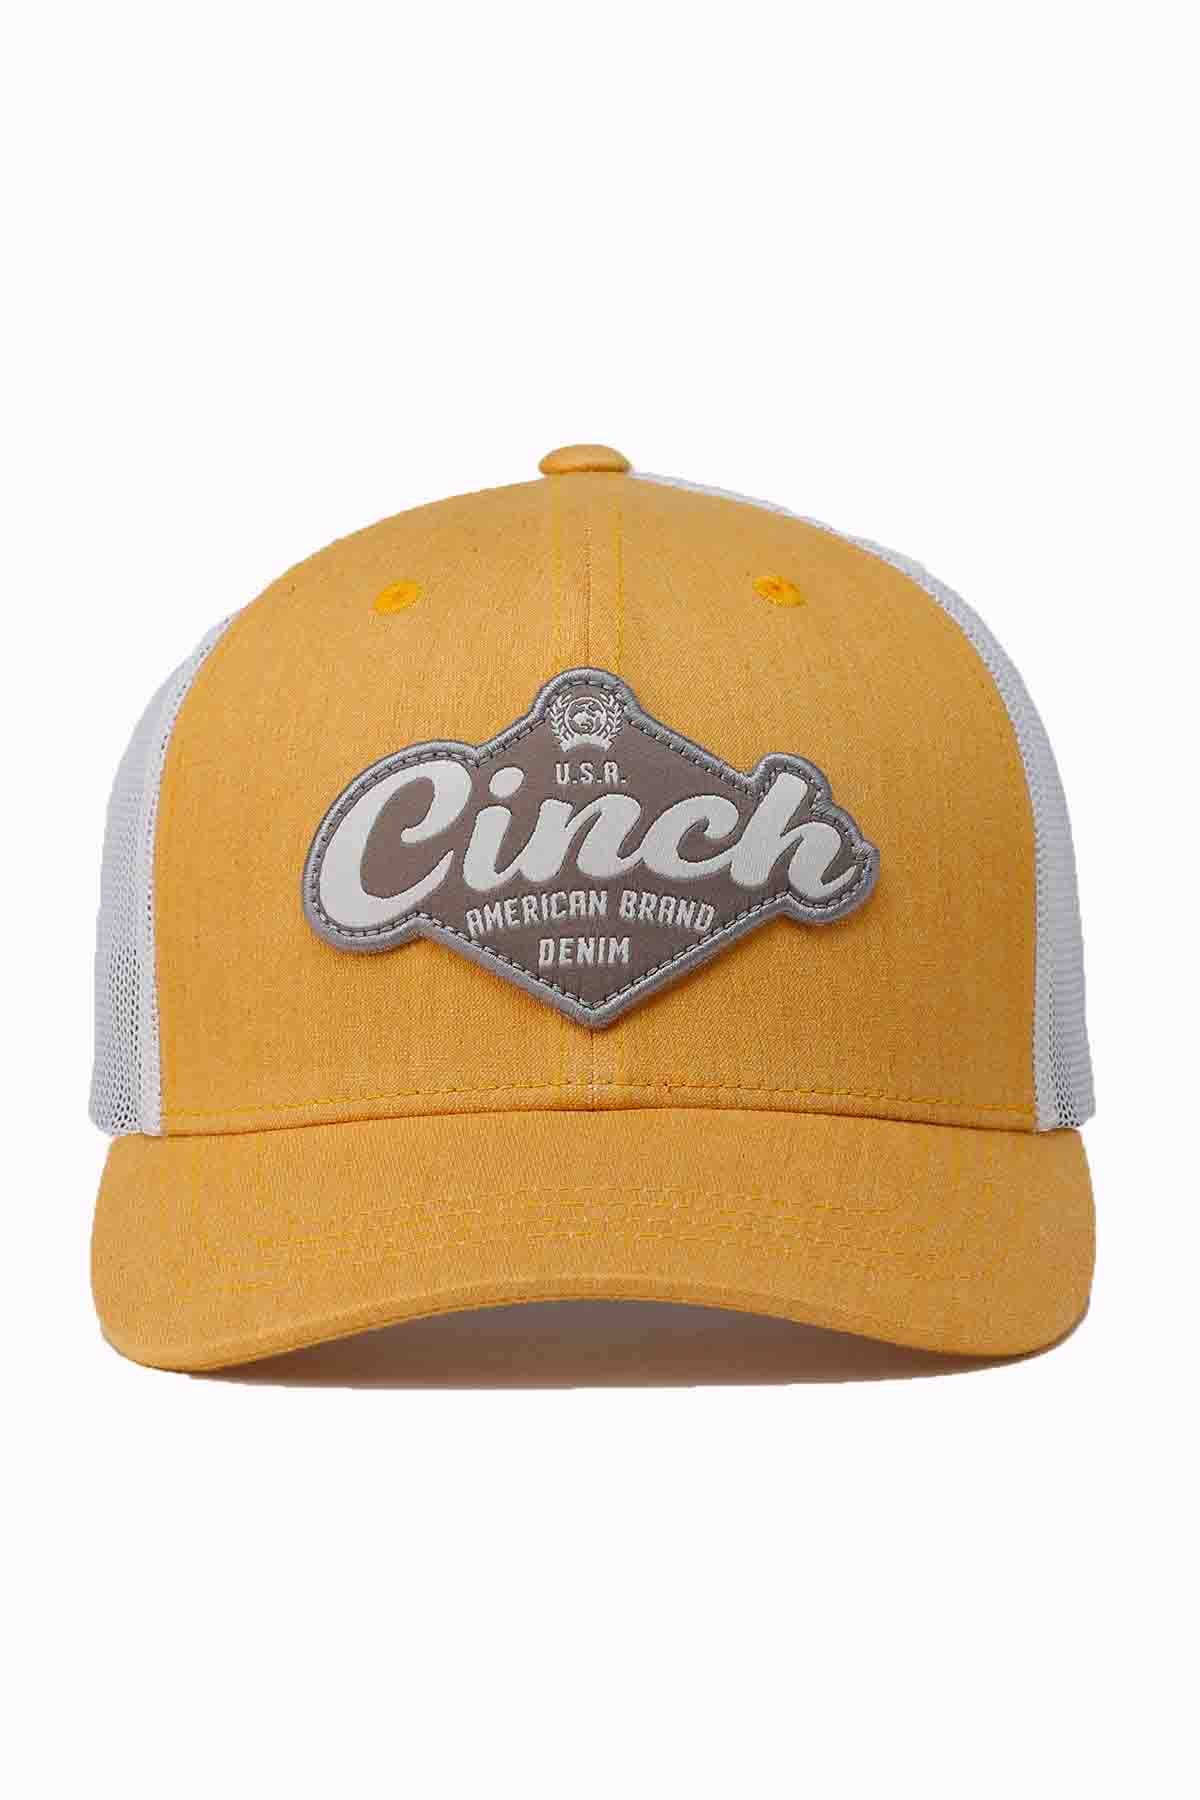 Men's Cinch American Brand Denim Cap Gold